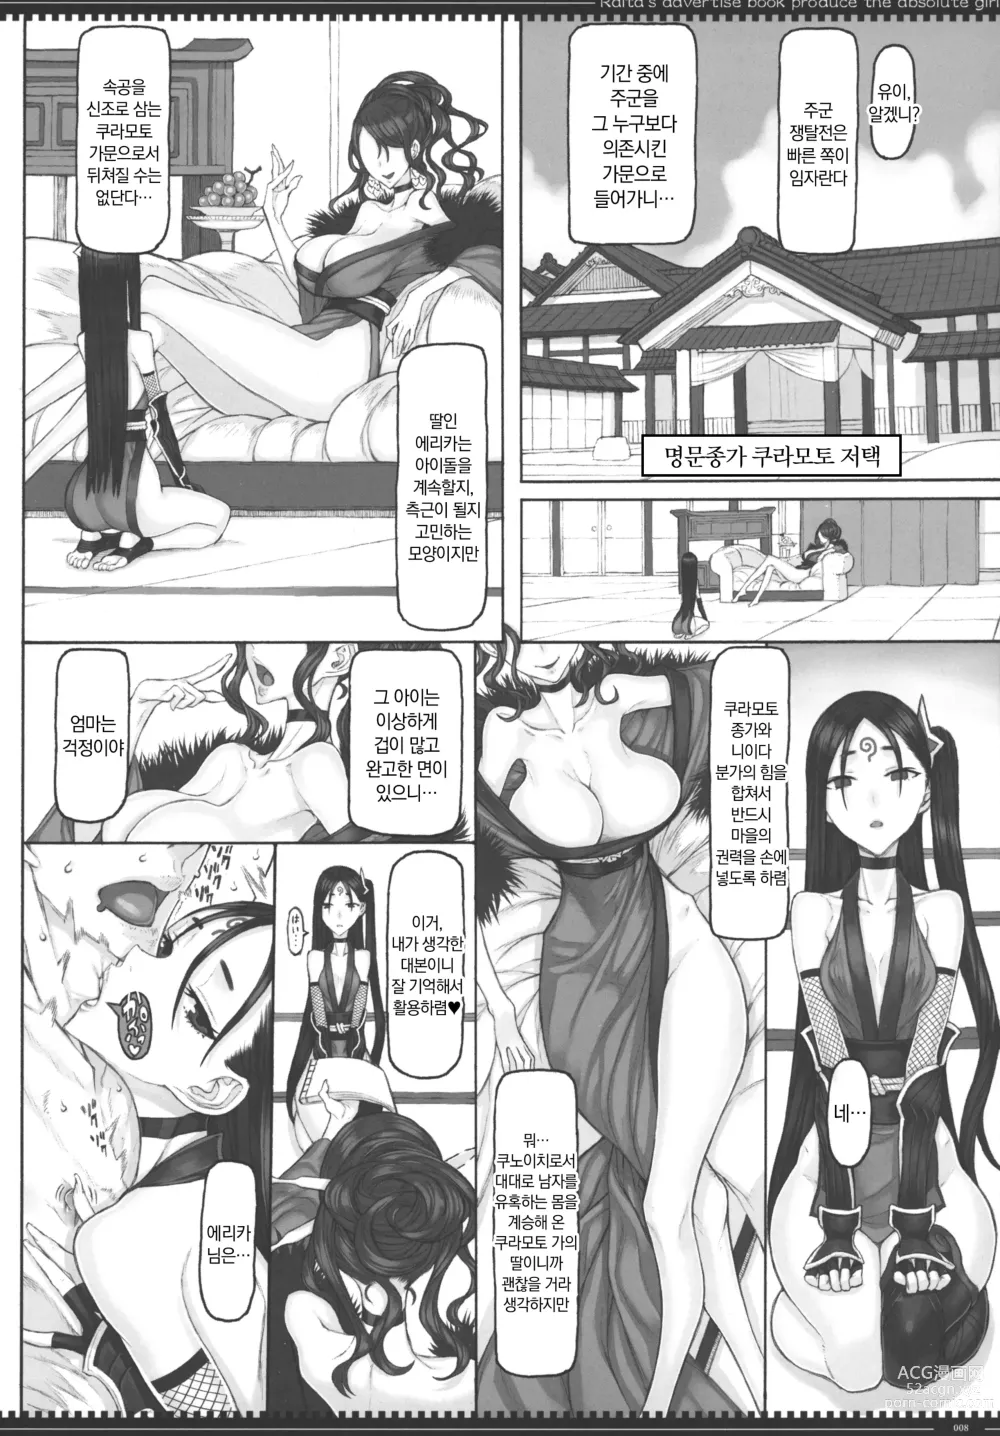 Page 7 of doujinshi 마법소녀 22.0 + C101 회장 한정본